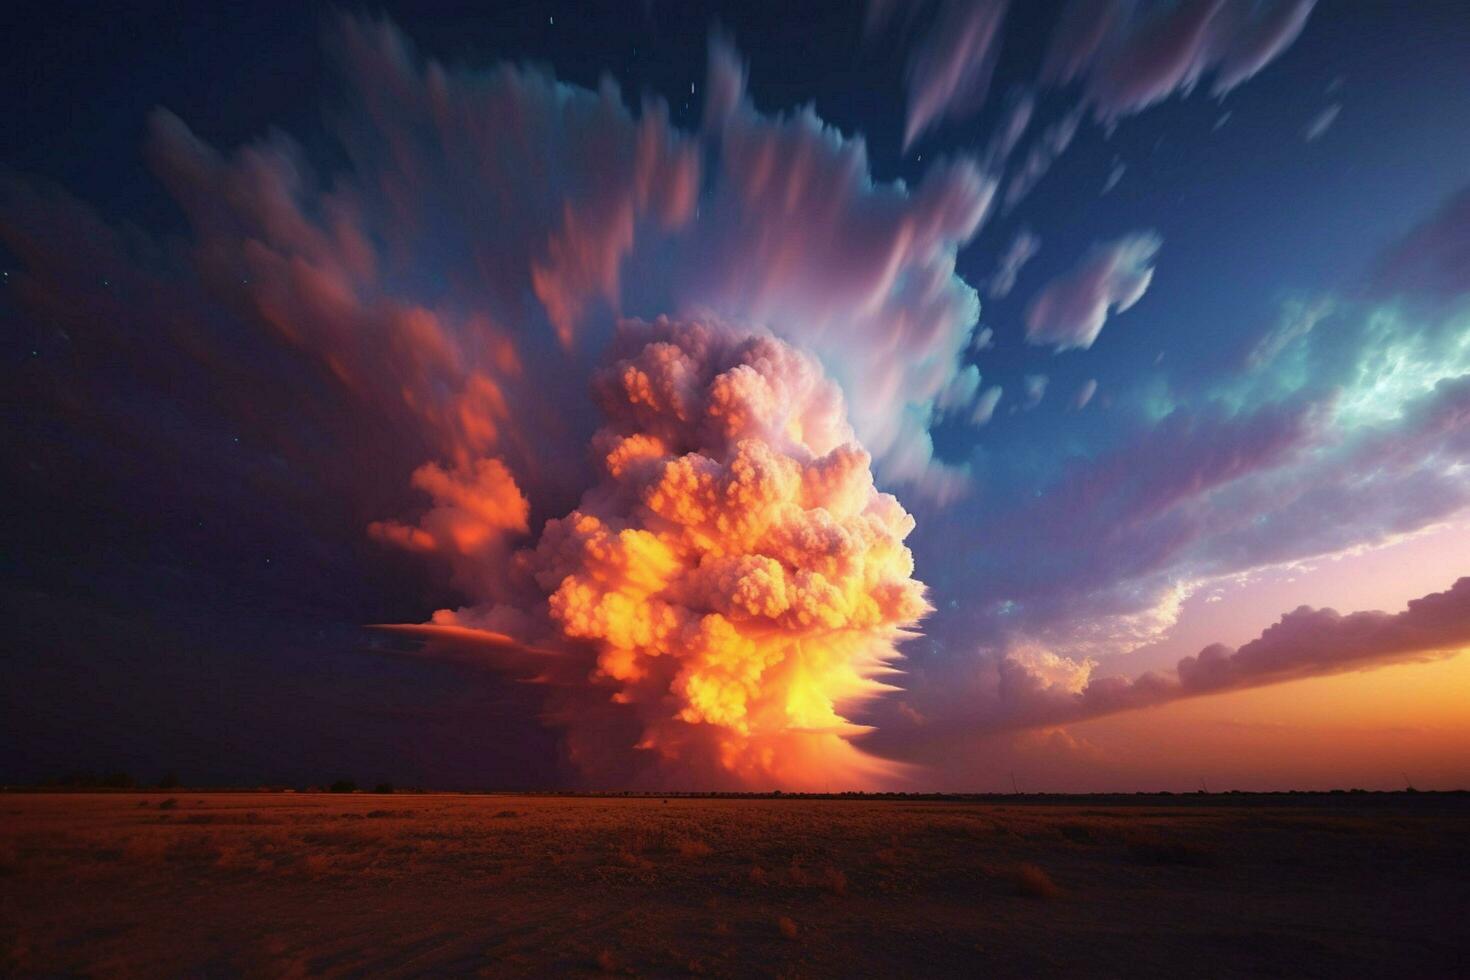 cloud sunset explosion photo